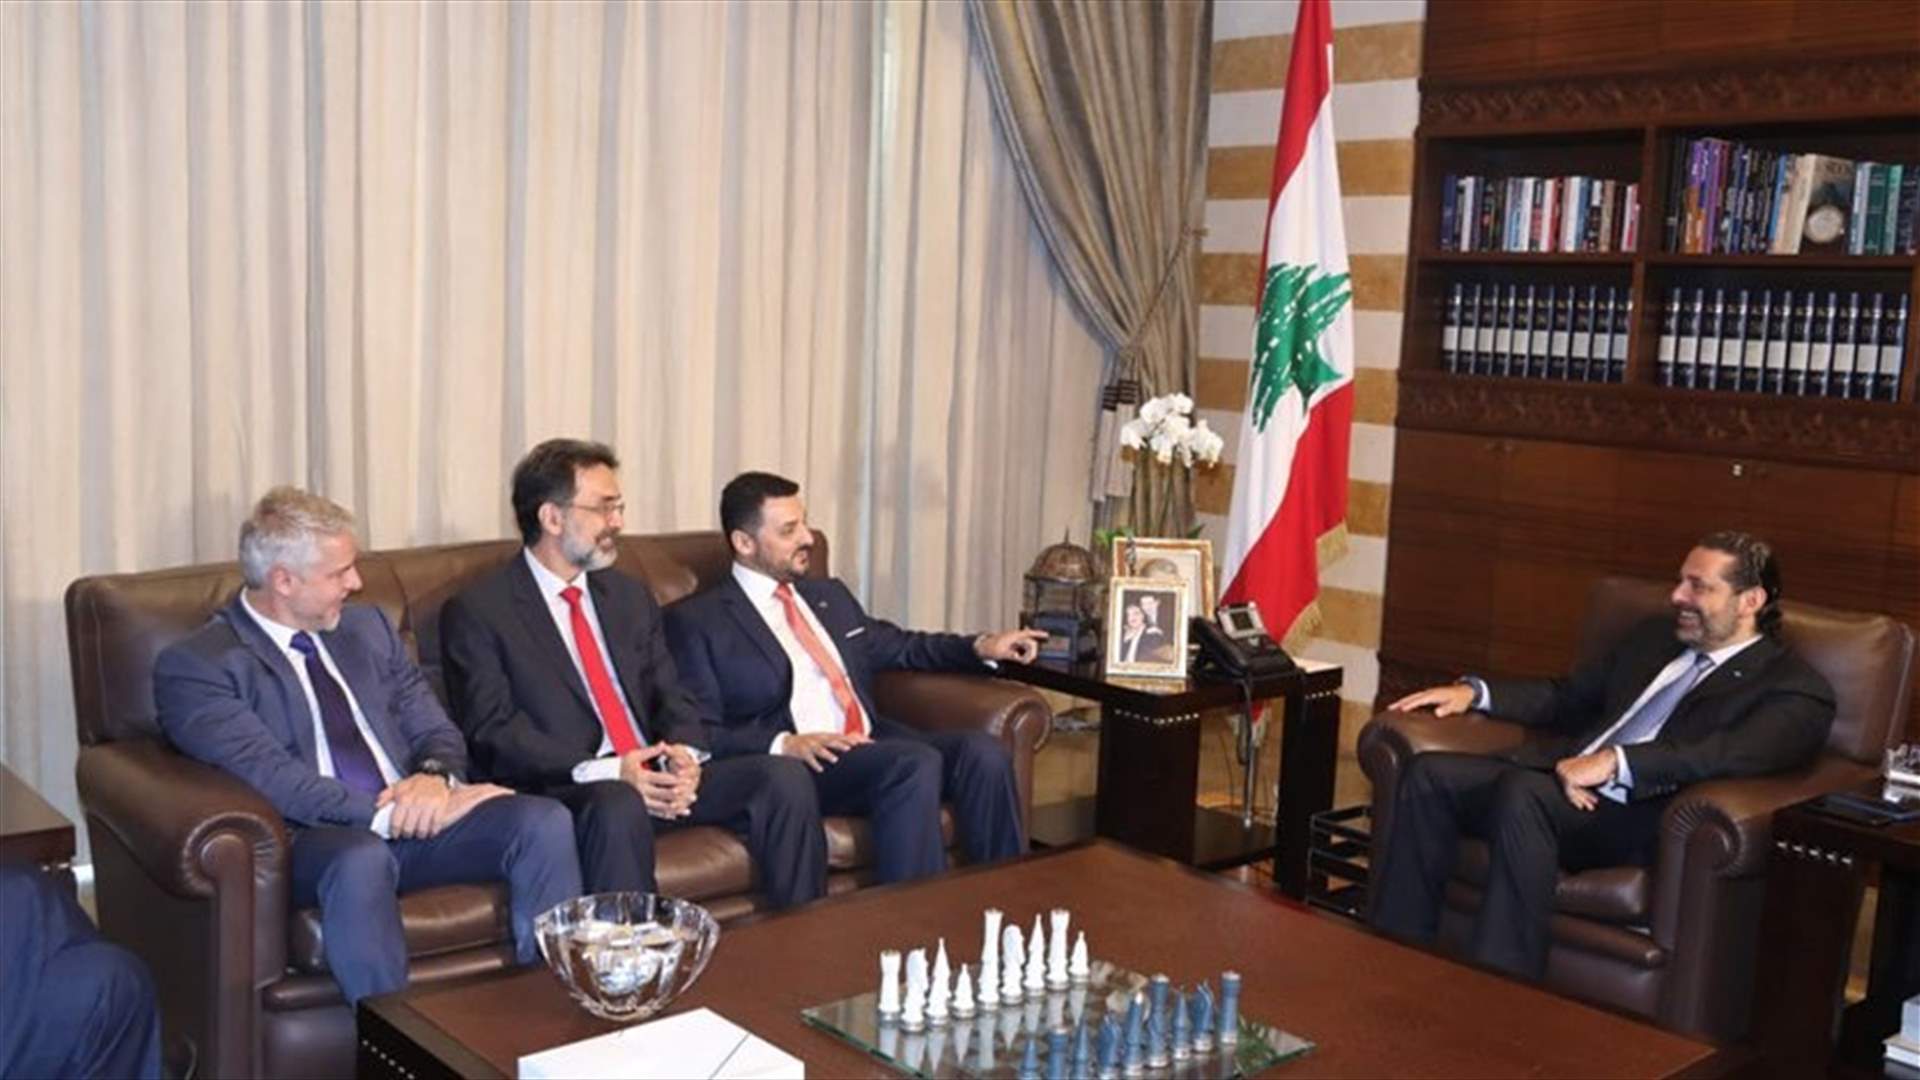 Brazilian Strategic Affairs Secretary says visit to Lebanon aims at improving bilateral ties